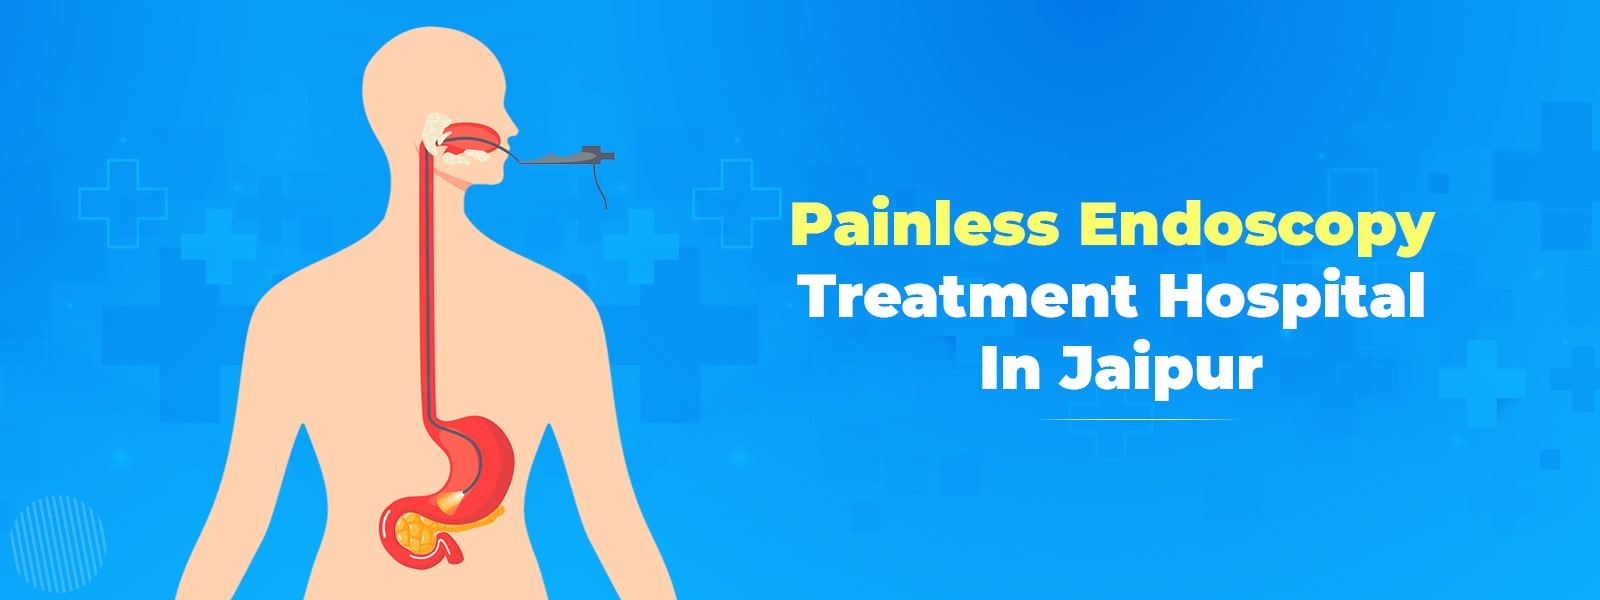 Painless endoscopy treatment in Jaipur